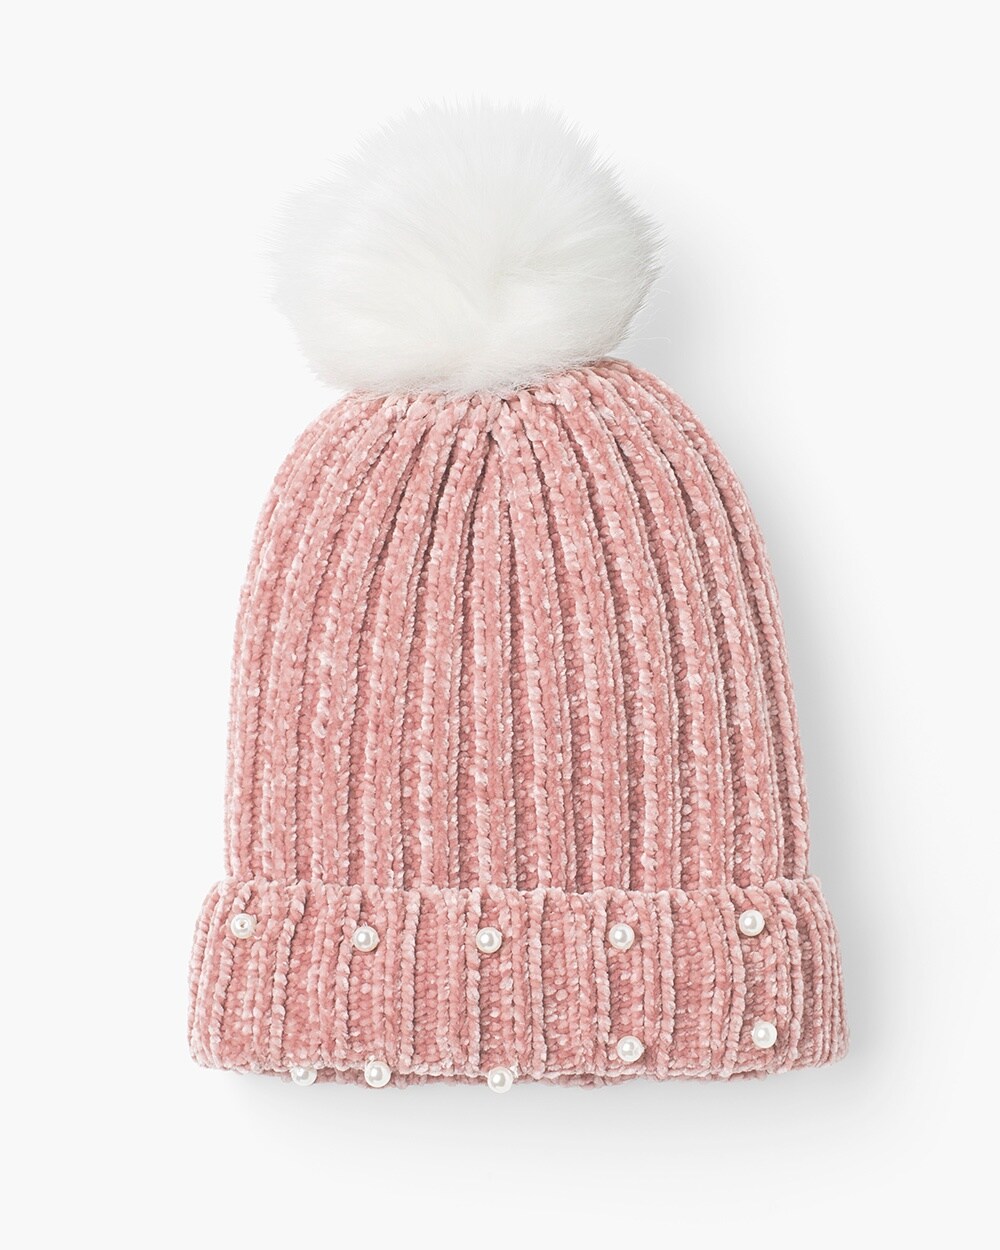 Cozy Blush Pom-Pom Hat